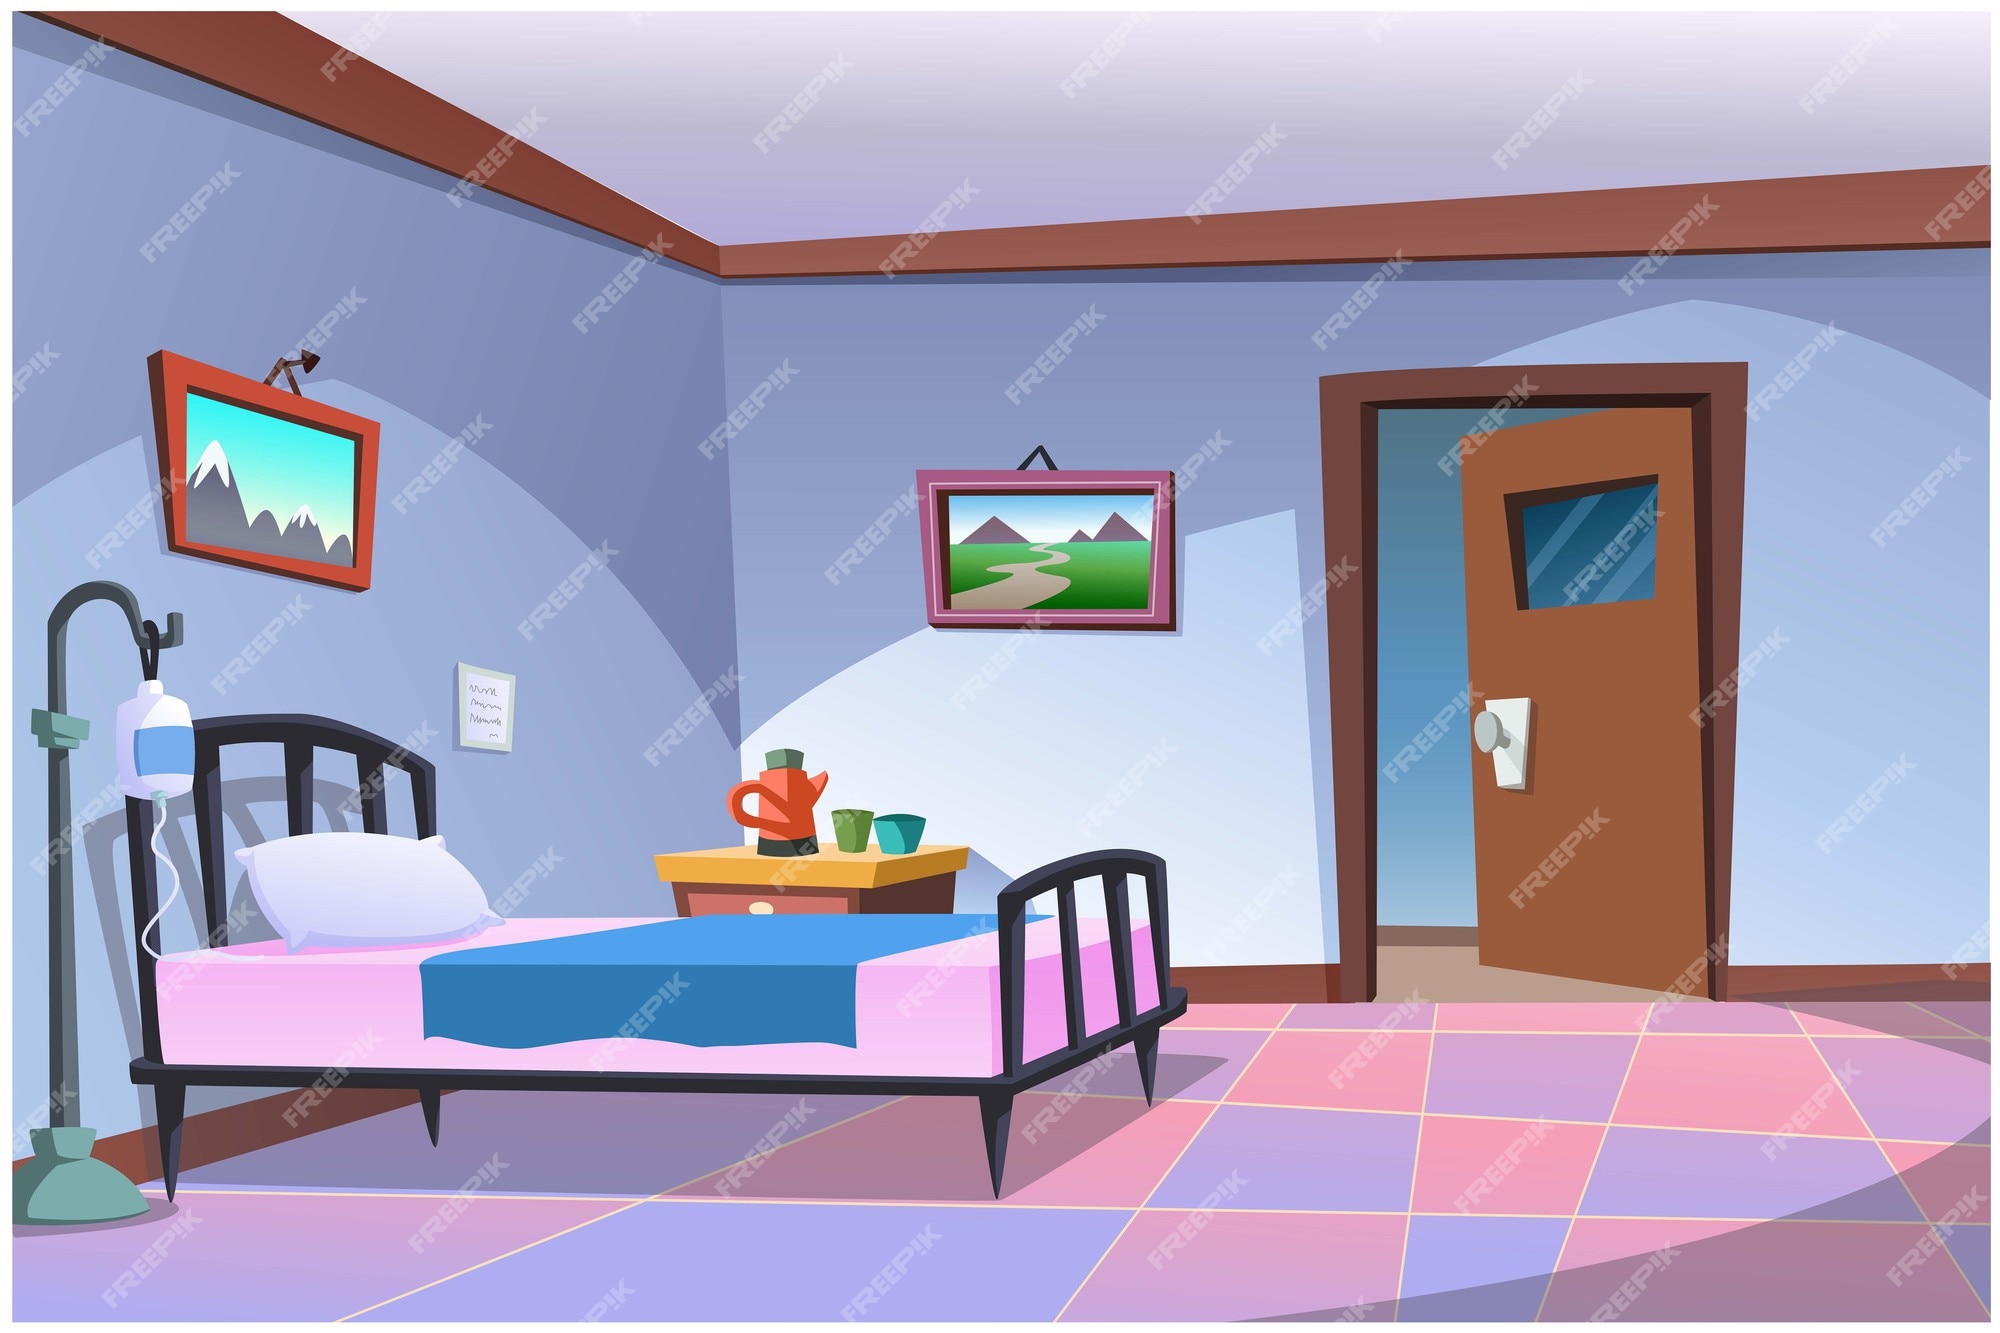 Bedroom Cartoon Room Images - Free Download on Freepik